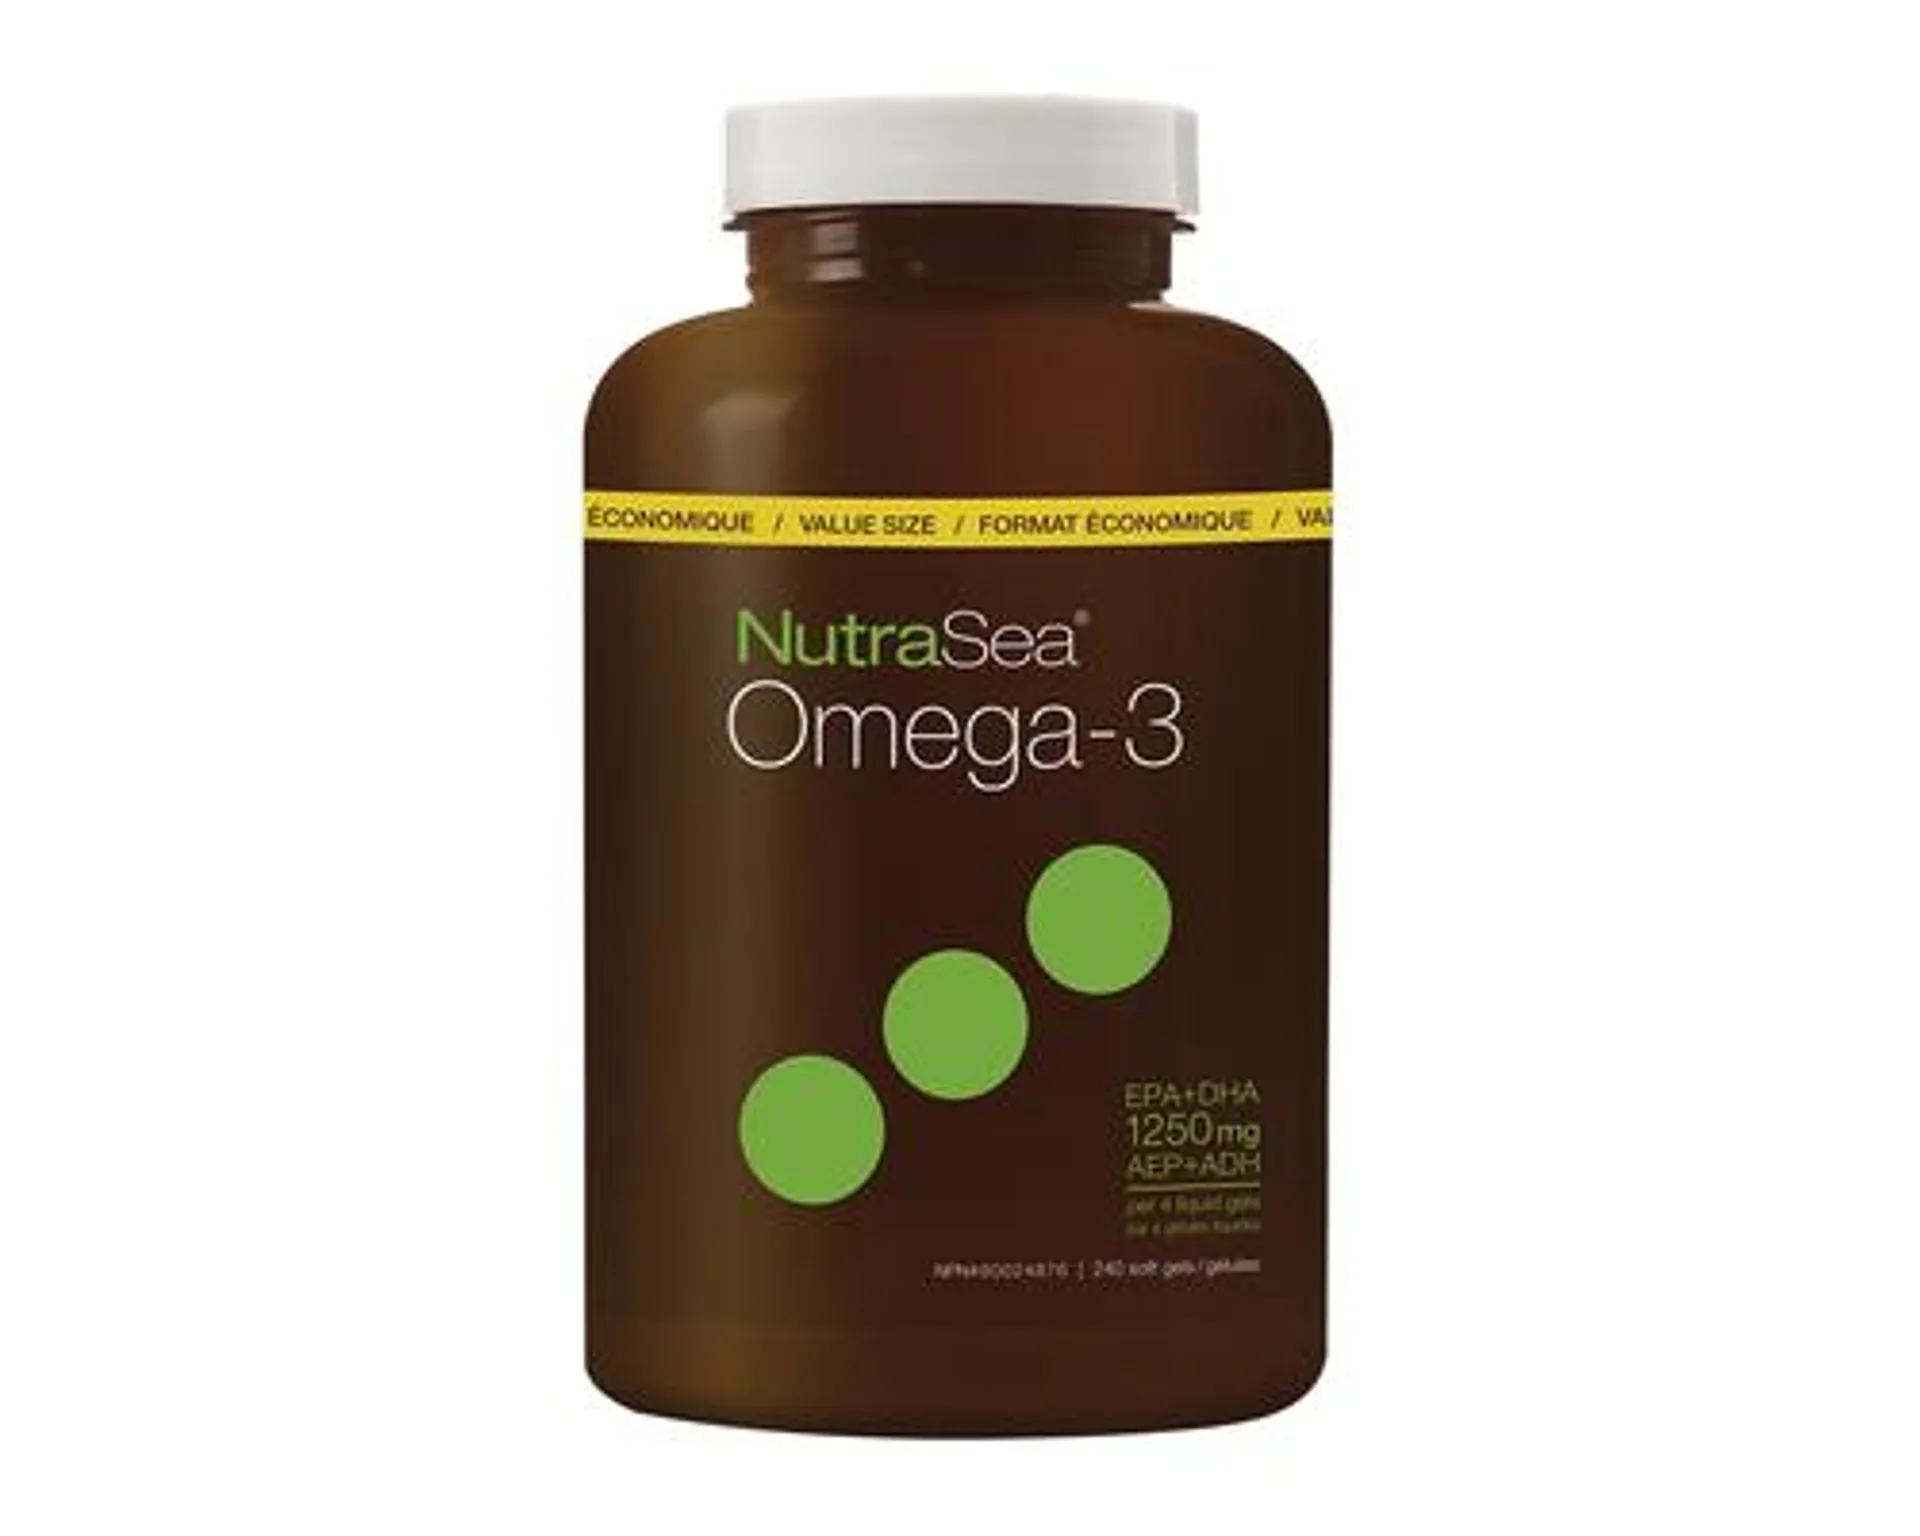 NutraSea Omega-3 240 Softgels